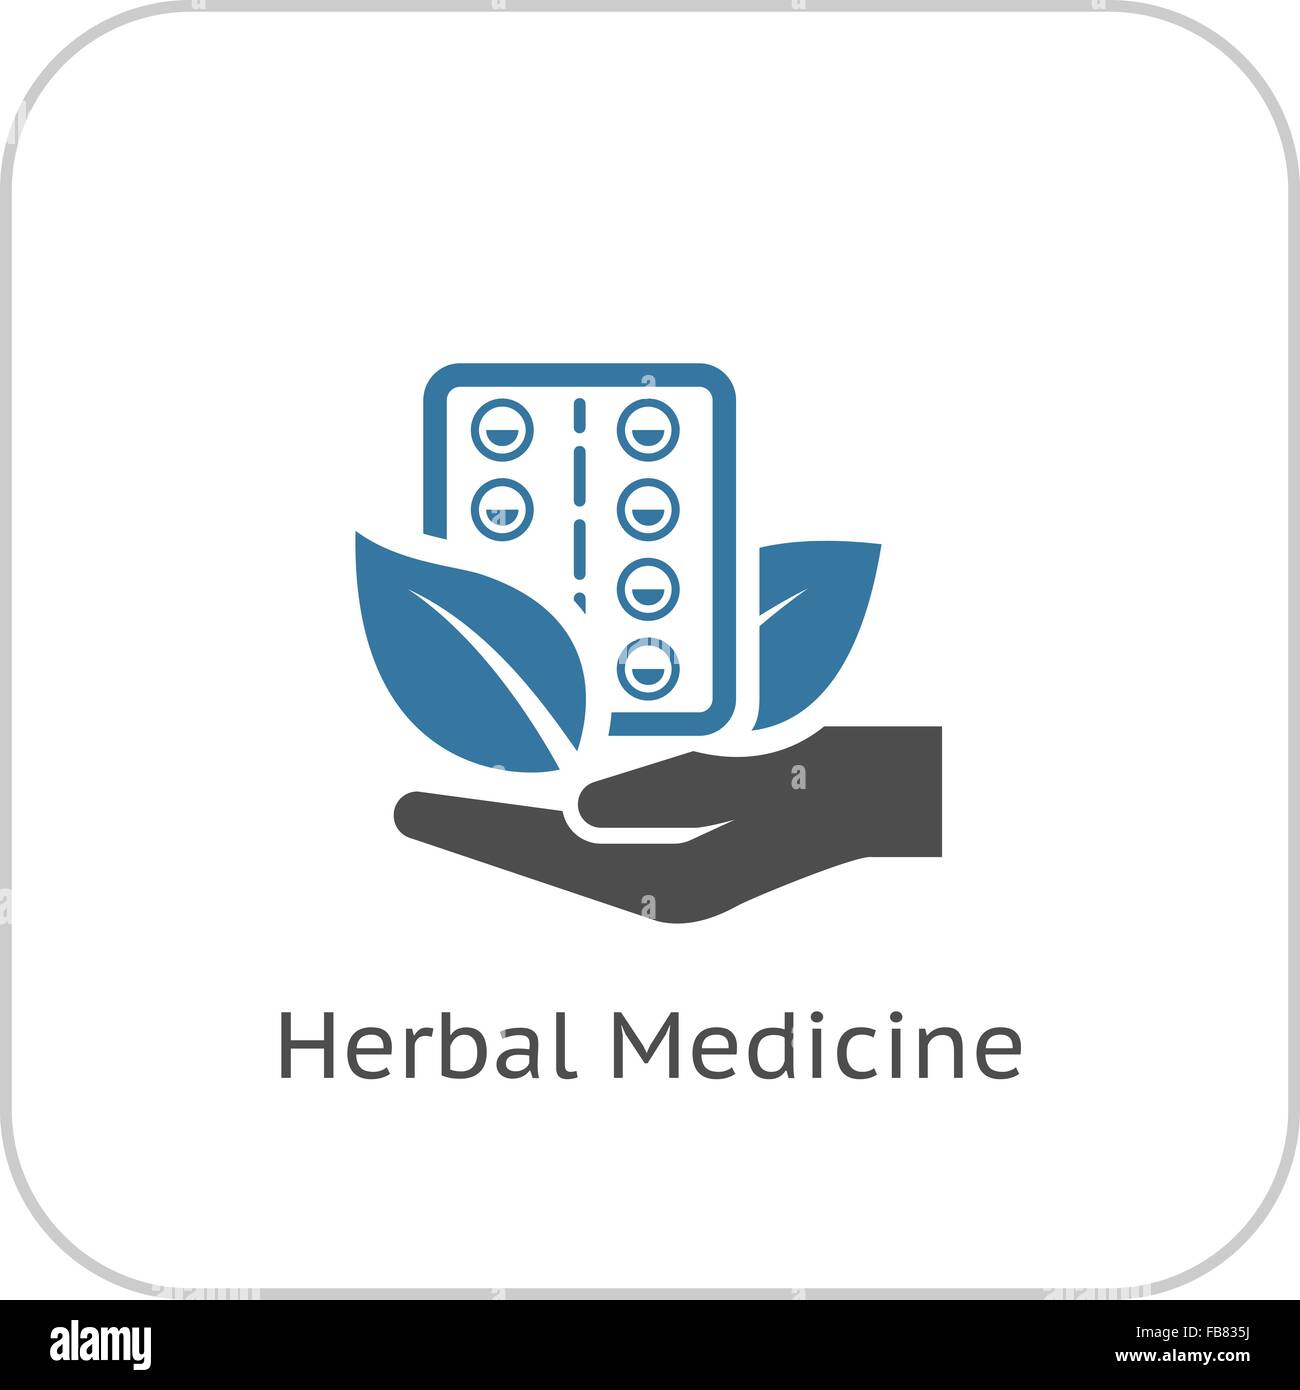 Herbal Medicine Icon. Flat Design. Stock Vector